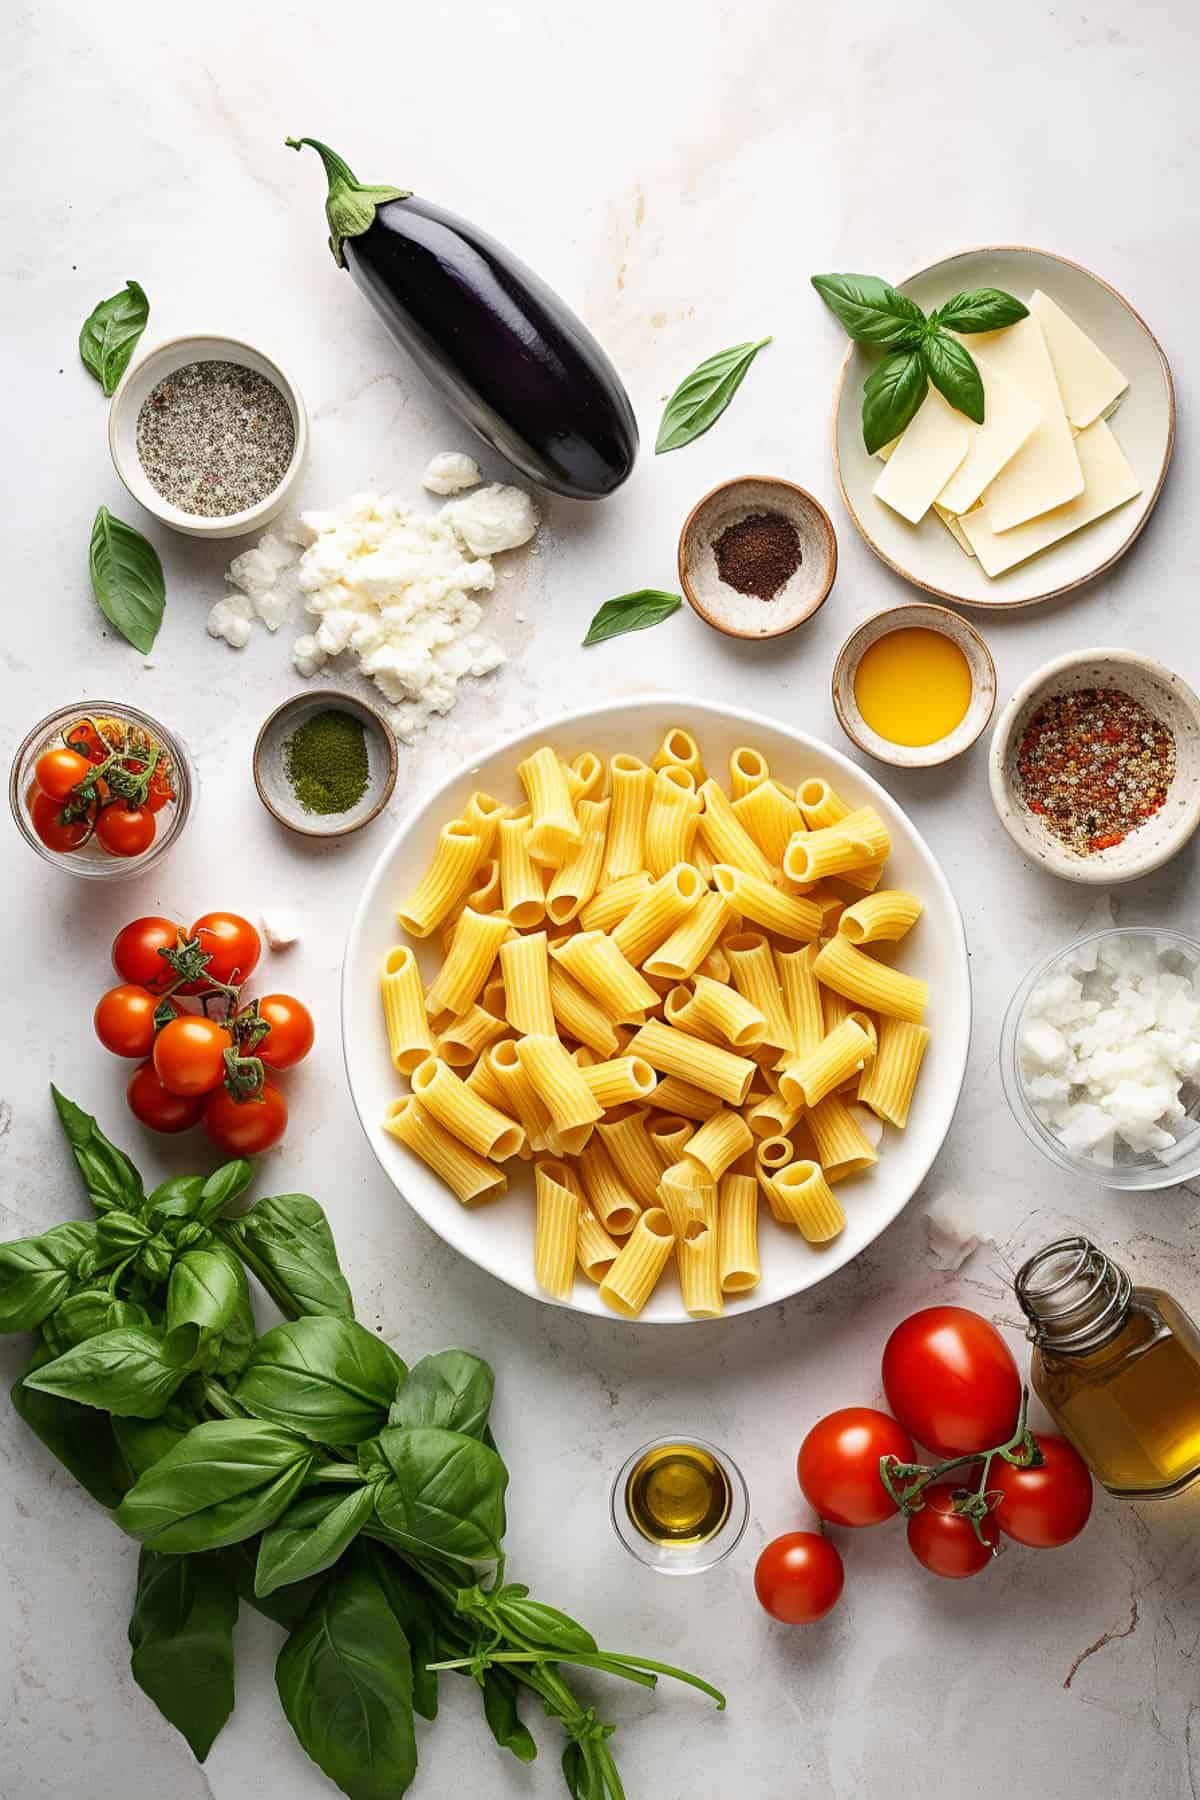 Ingredients for vegetable pasta bake.